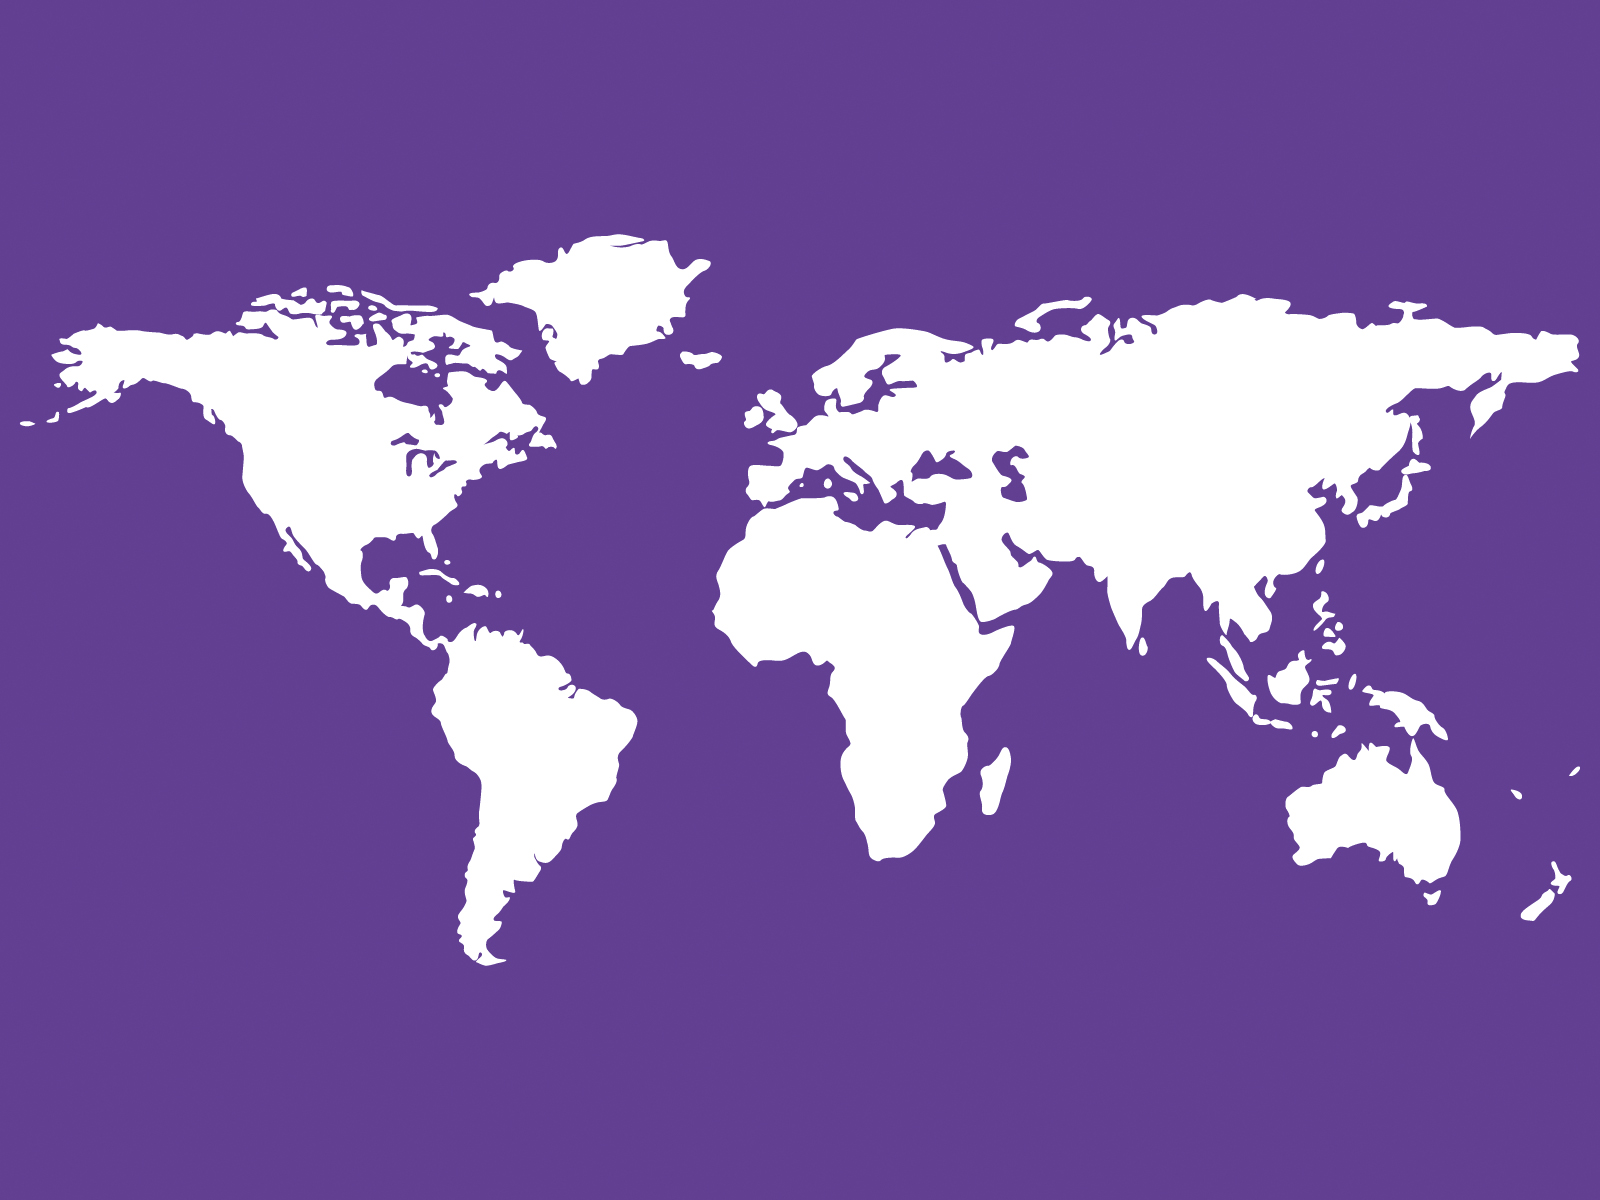 Purple World Maps Backgrounds - Business, Design, Purple Templates ...